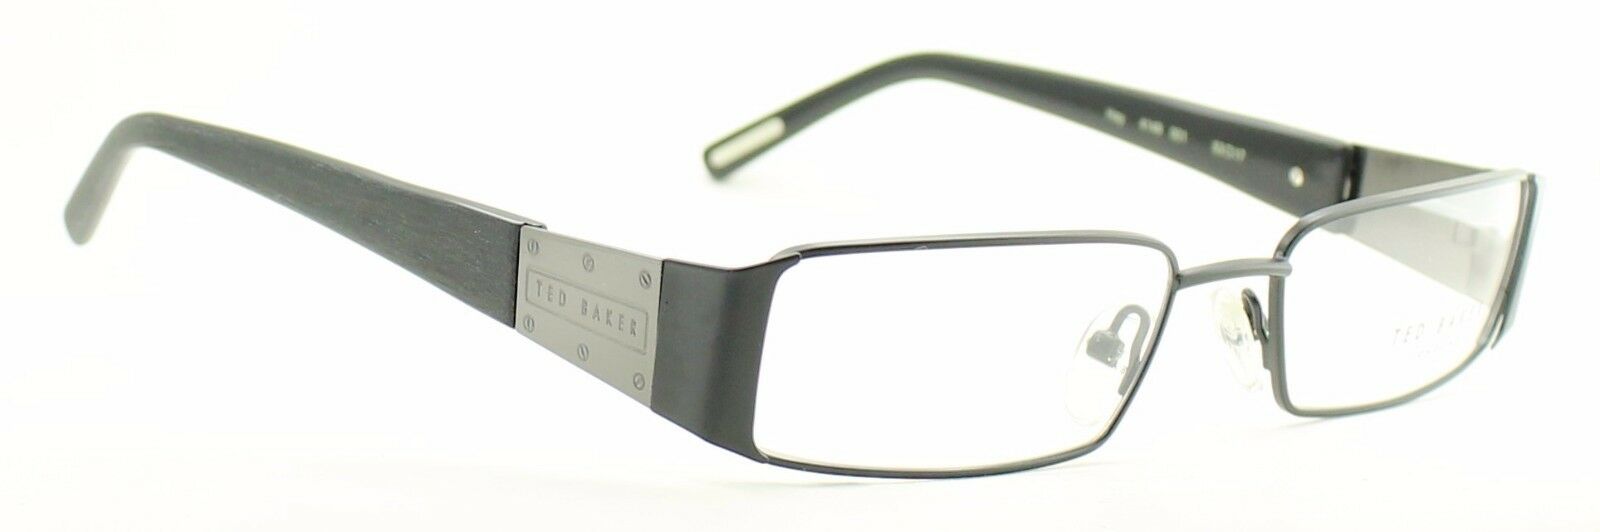 TED BAKER HAY 4149 001 53mm Eyewear FRAMES Glasses Eyeglasses RX Optical - New